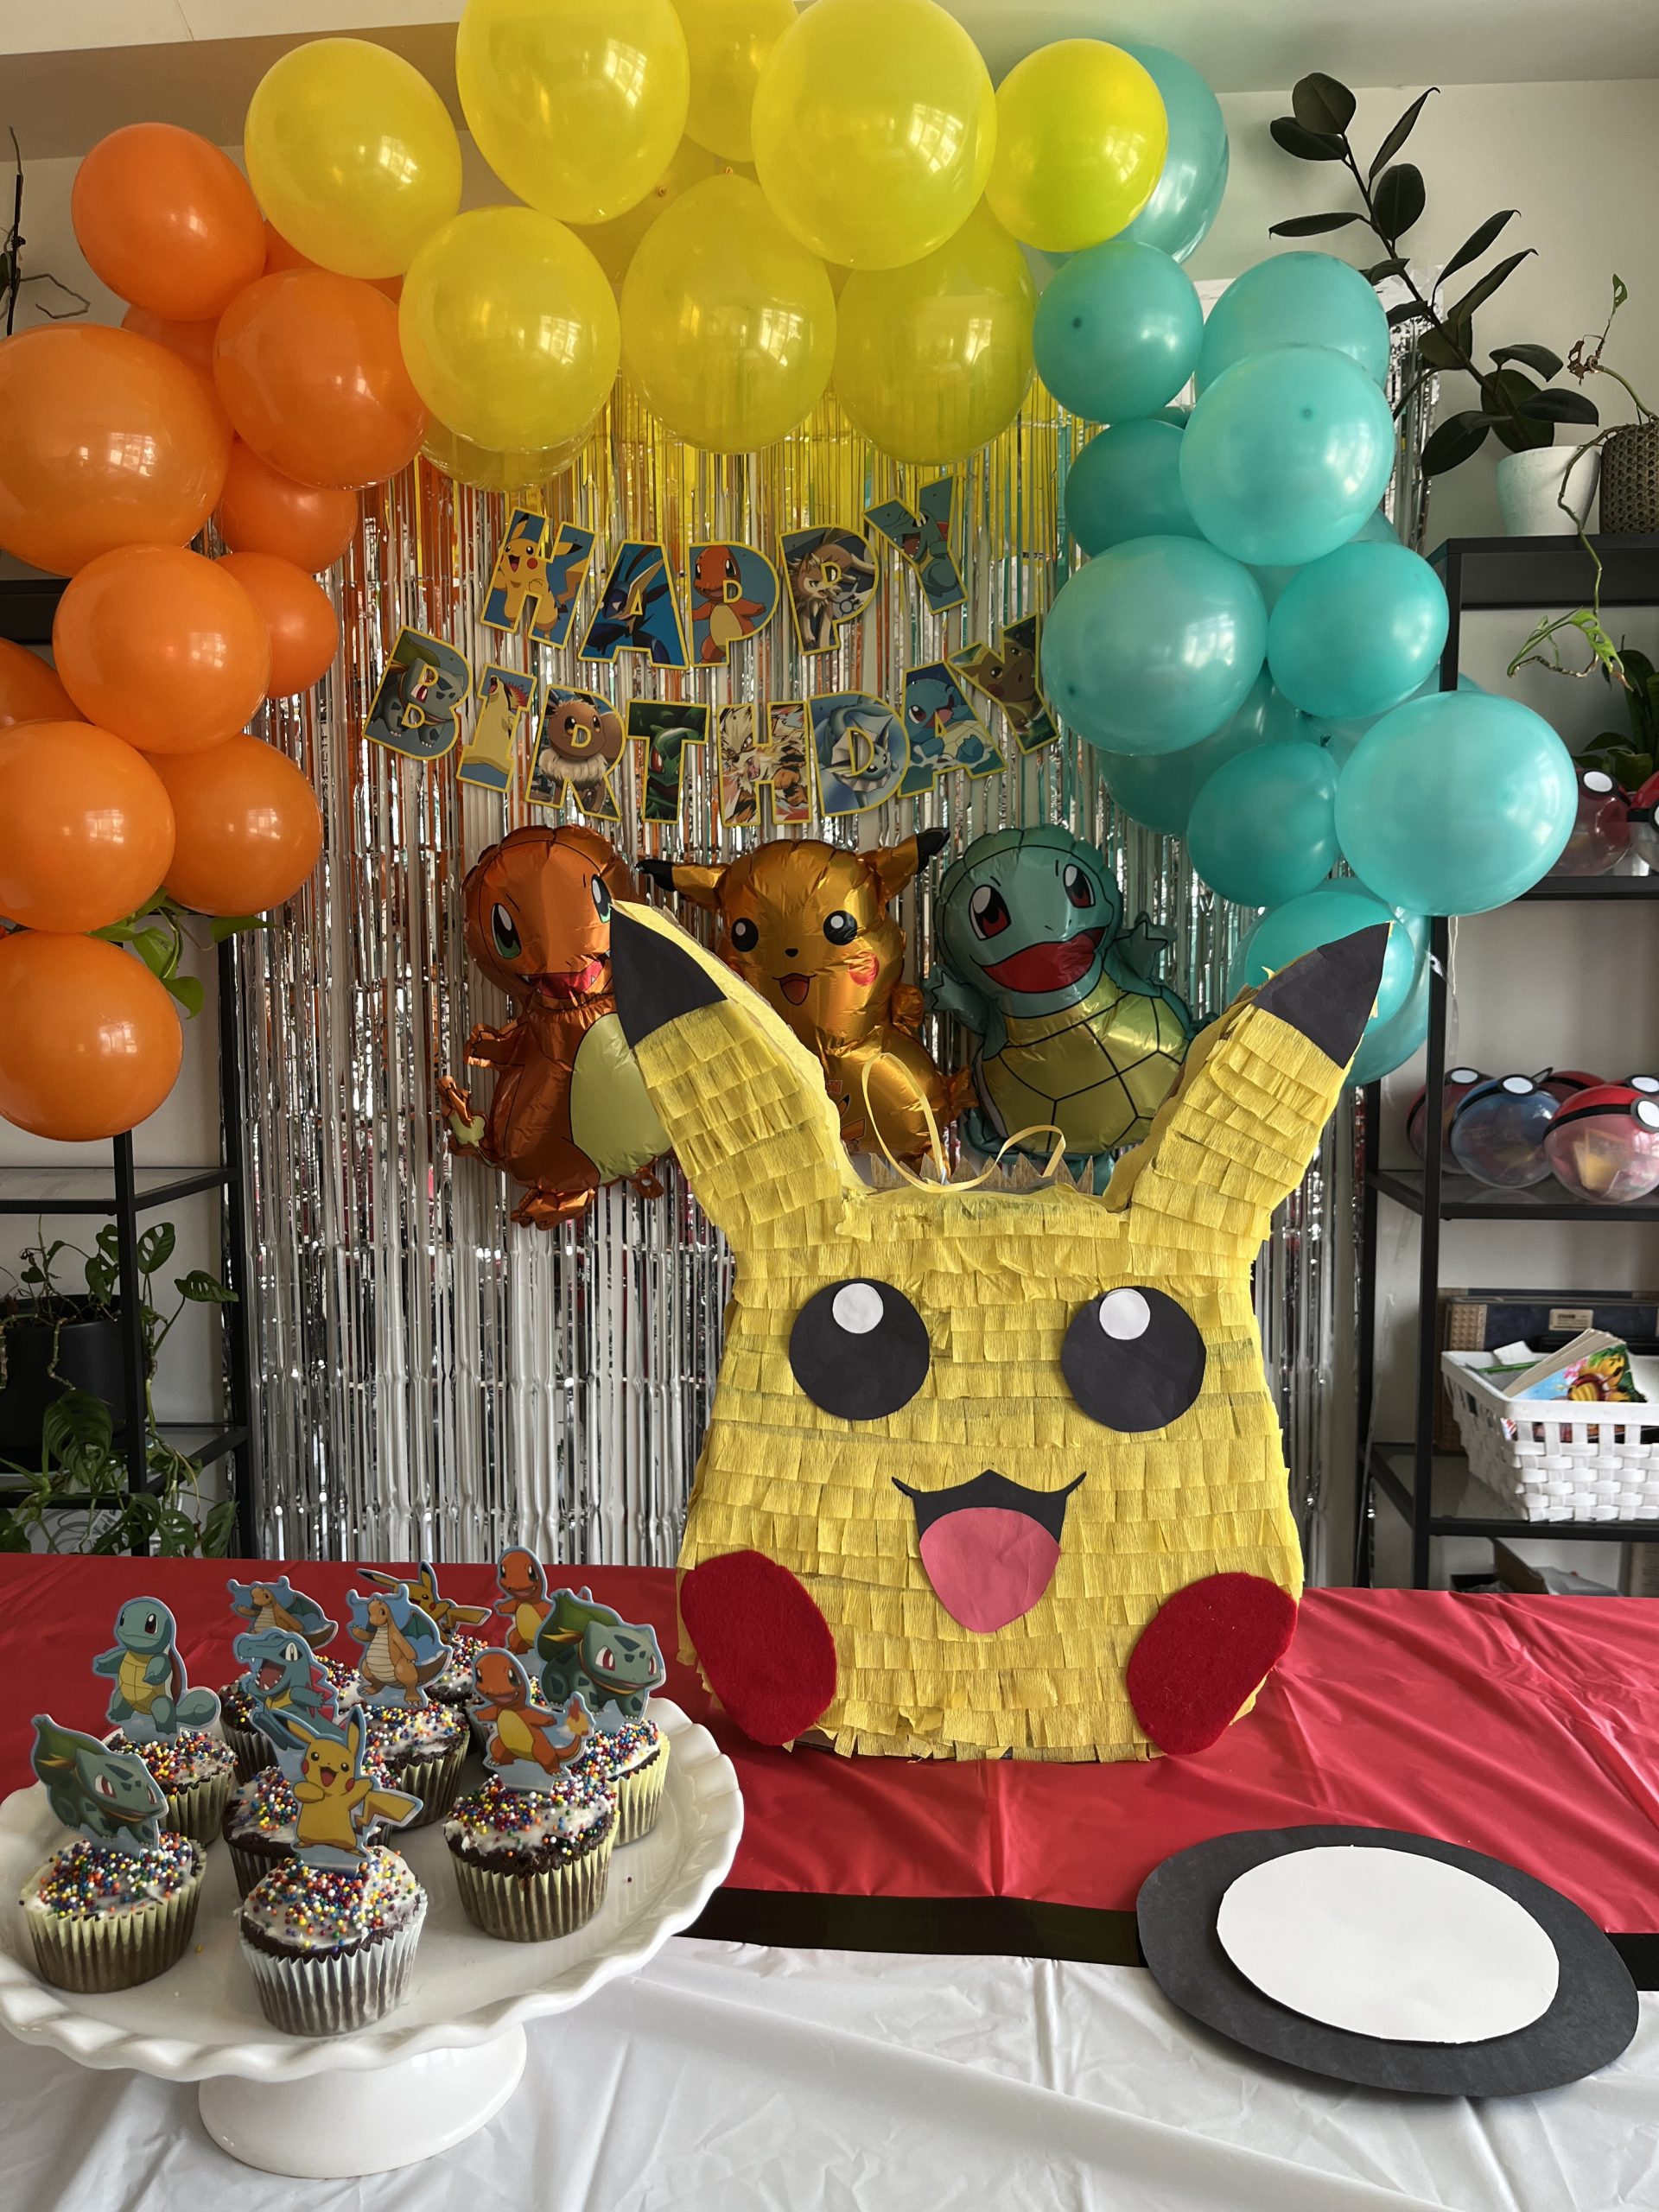 Pokemon Birthday Party